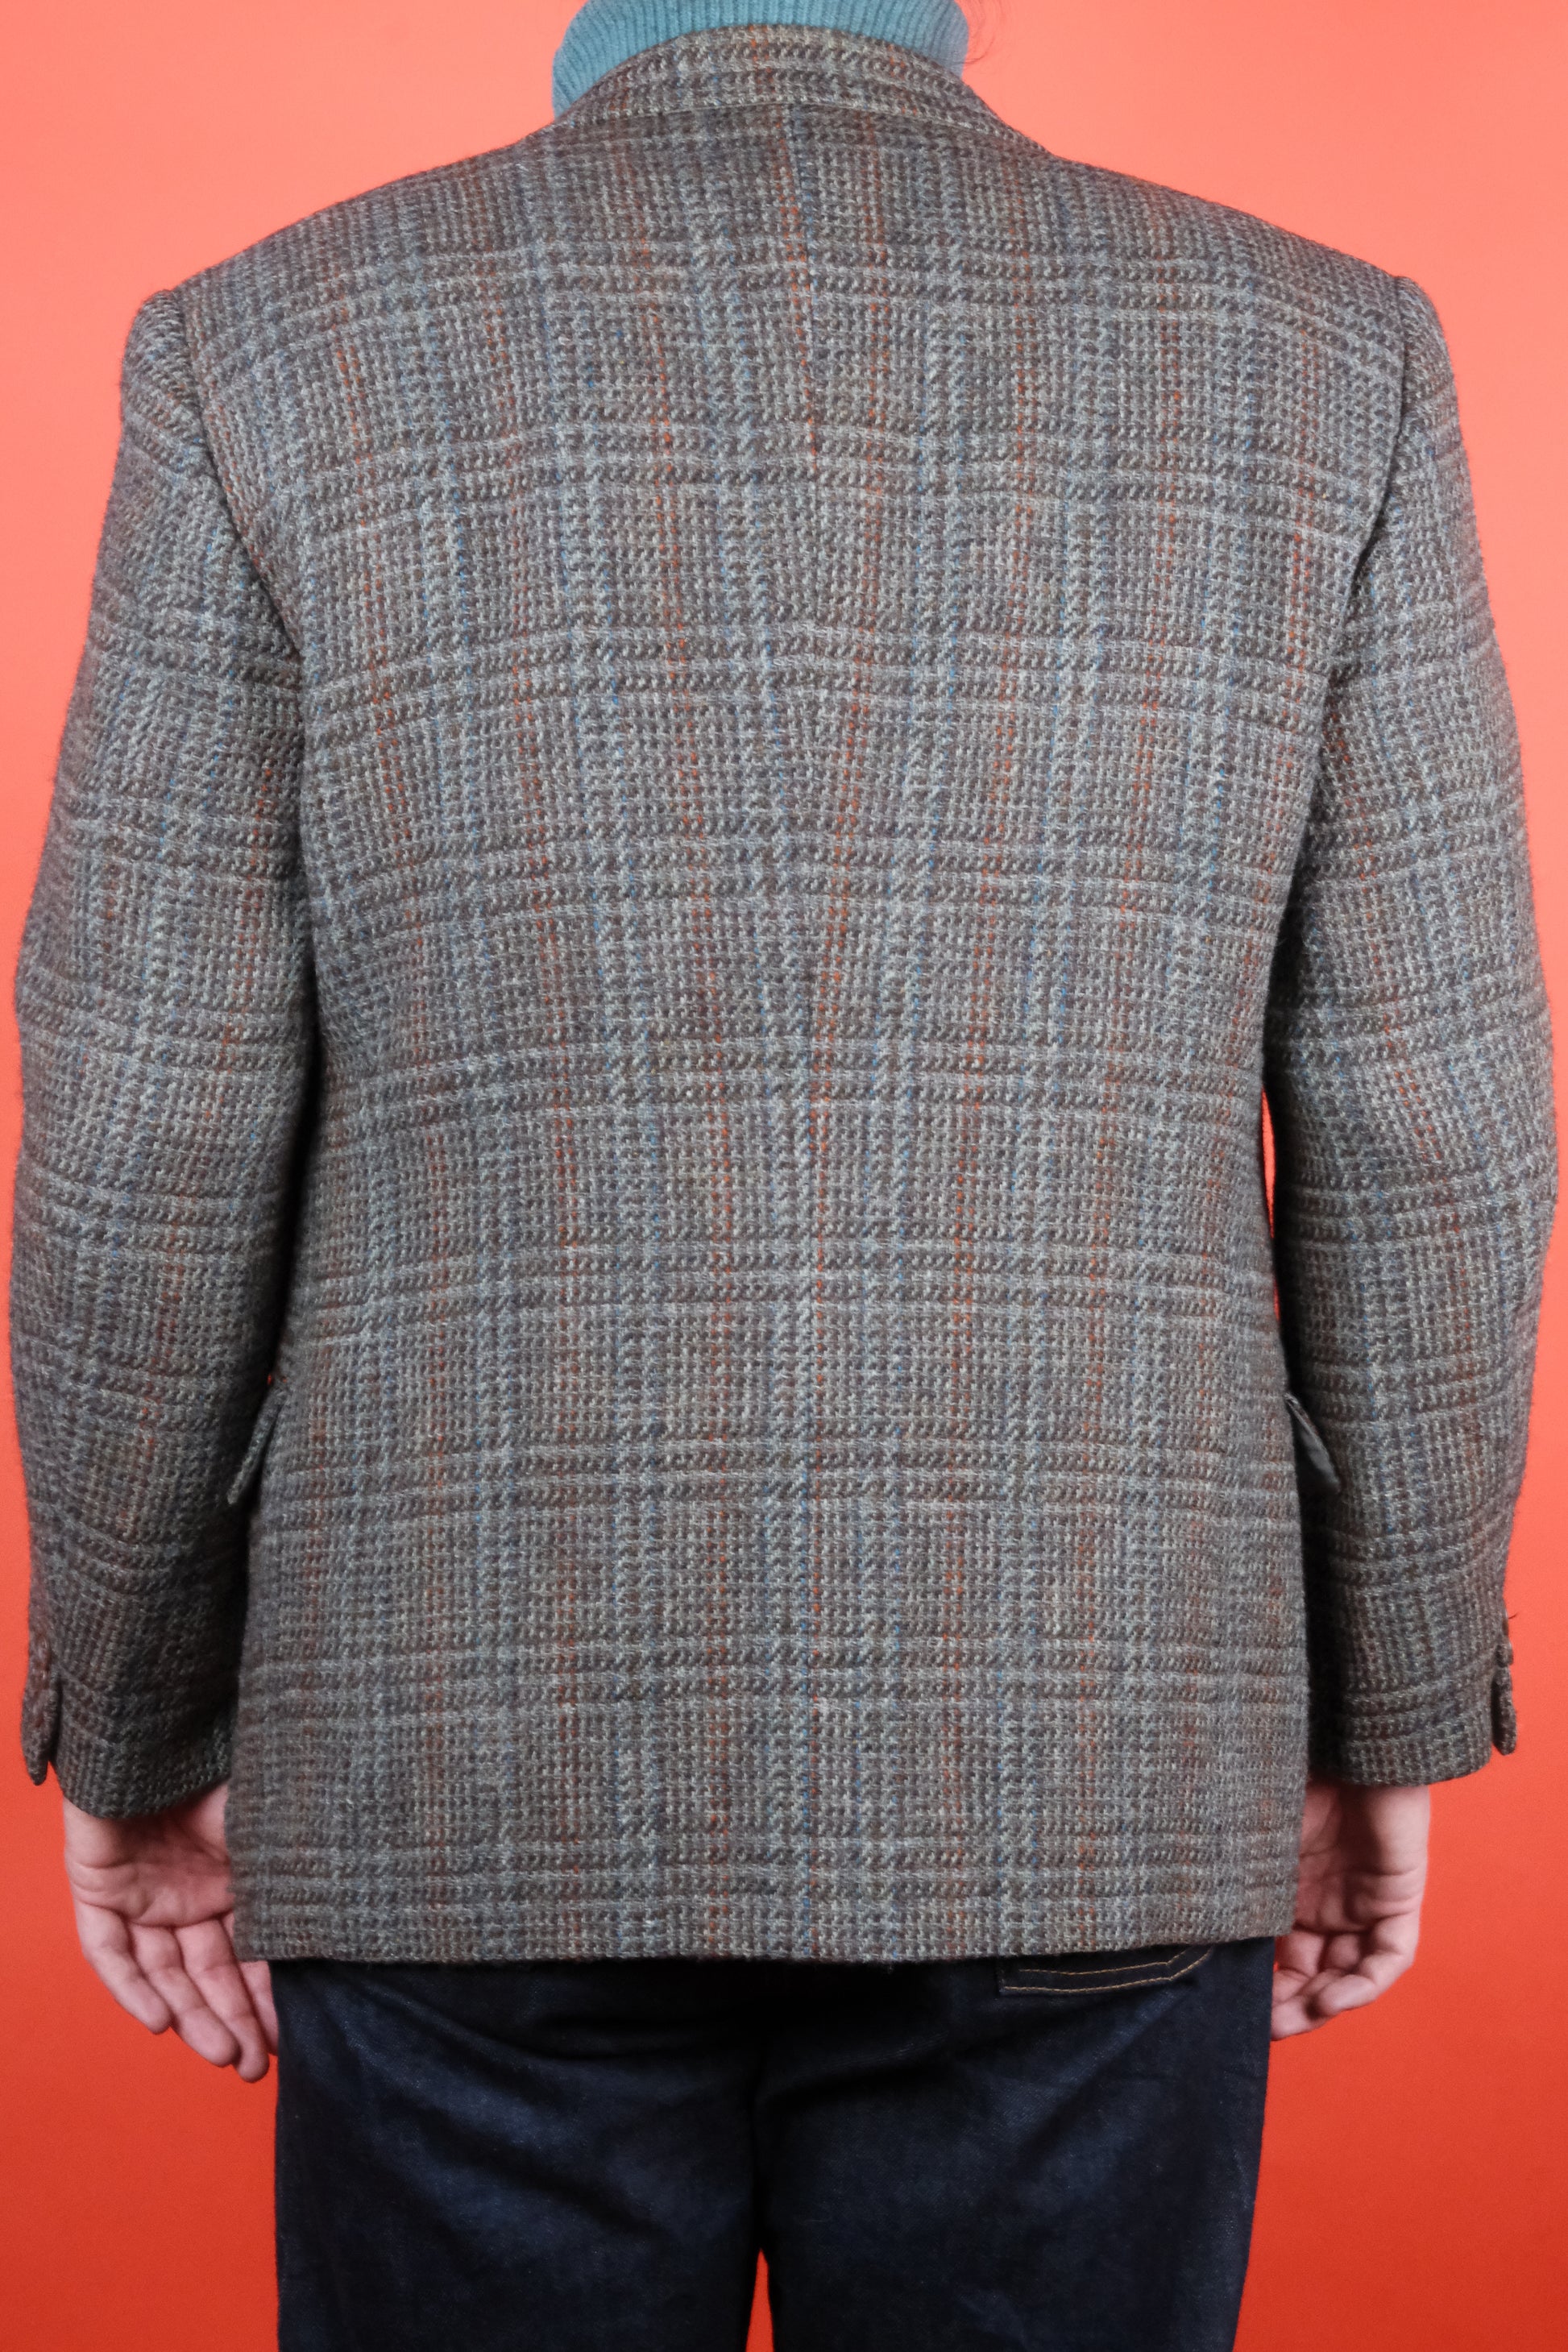 Harris Tweed Suit Jacket Made in Italy 'M/L' - vintage clothing clochard92.com